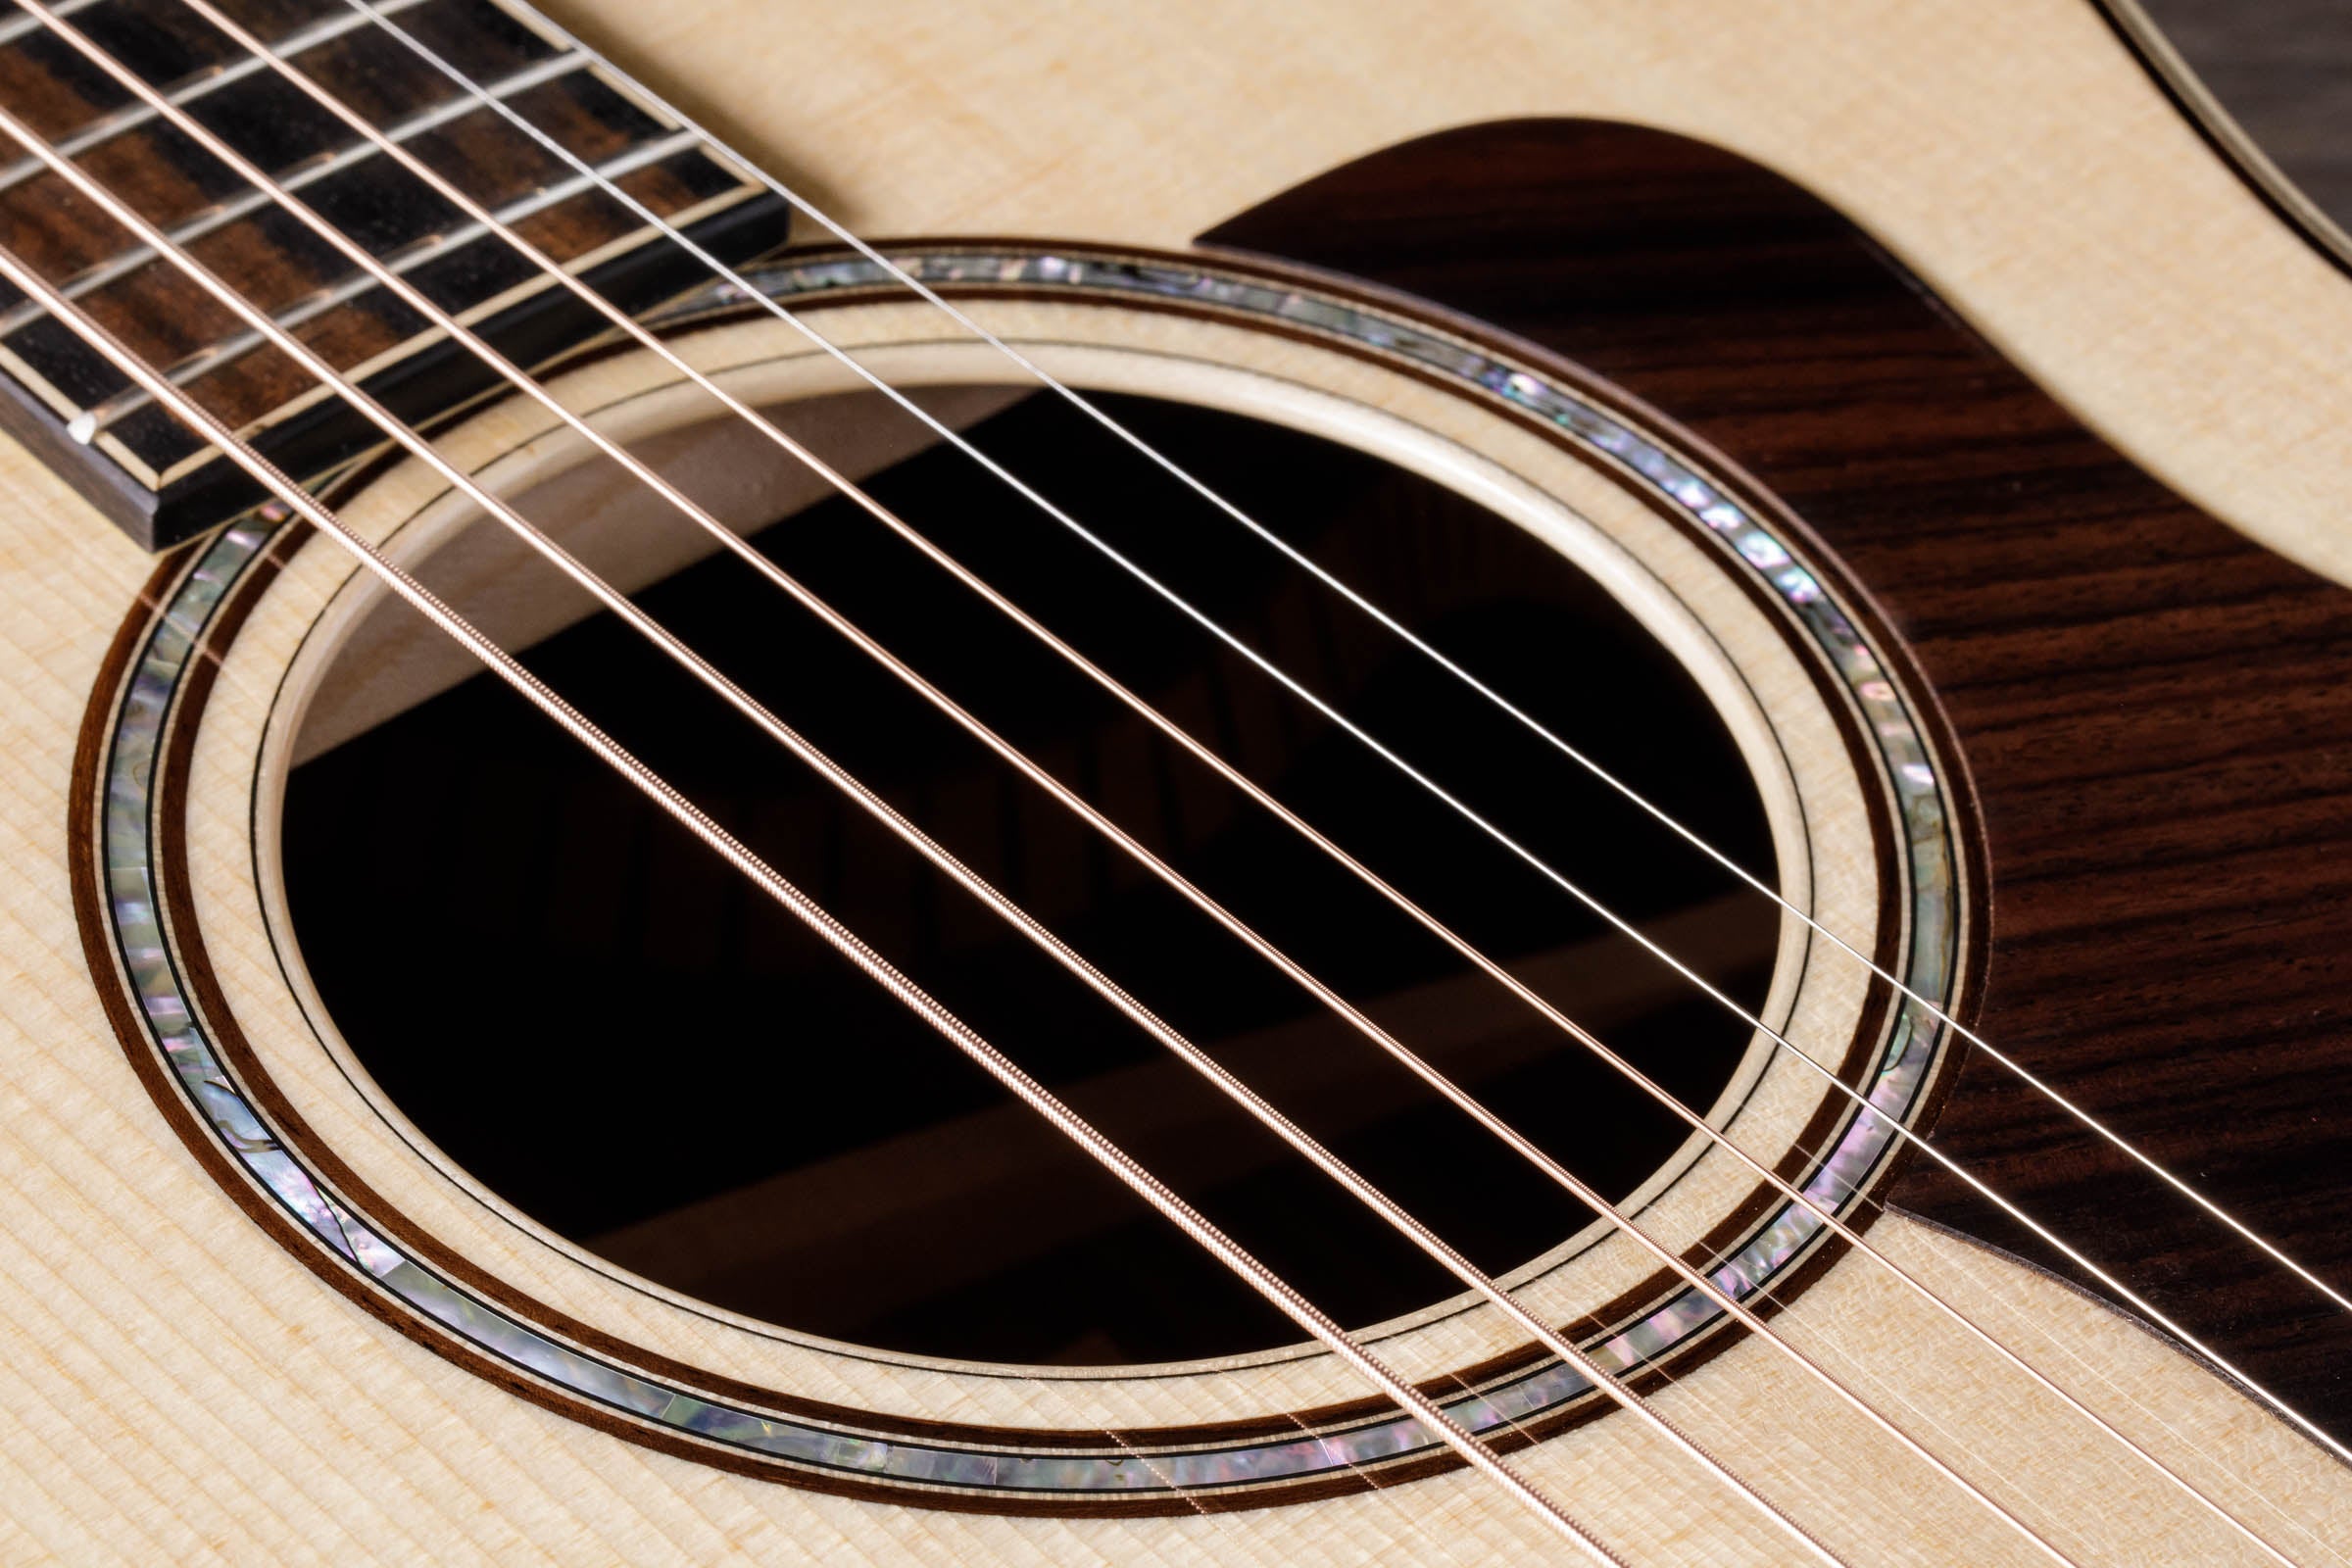 Taylor 814CE Electric Acoustic Guitar